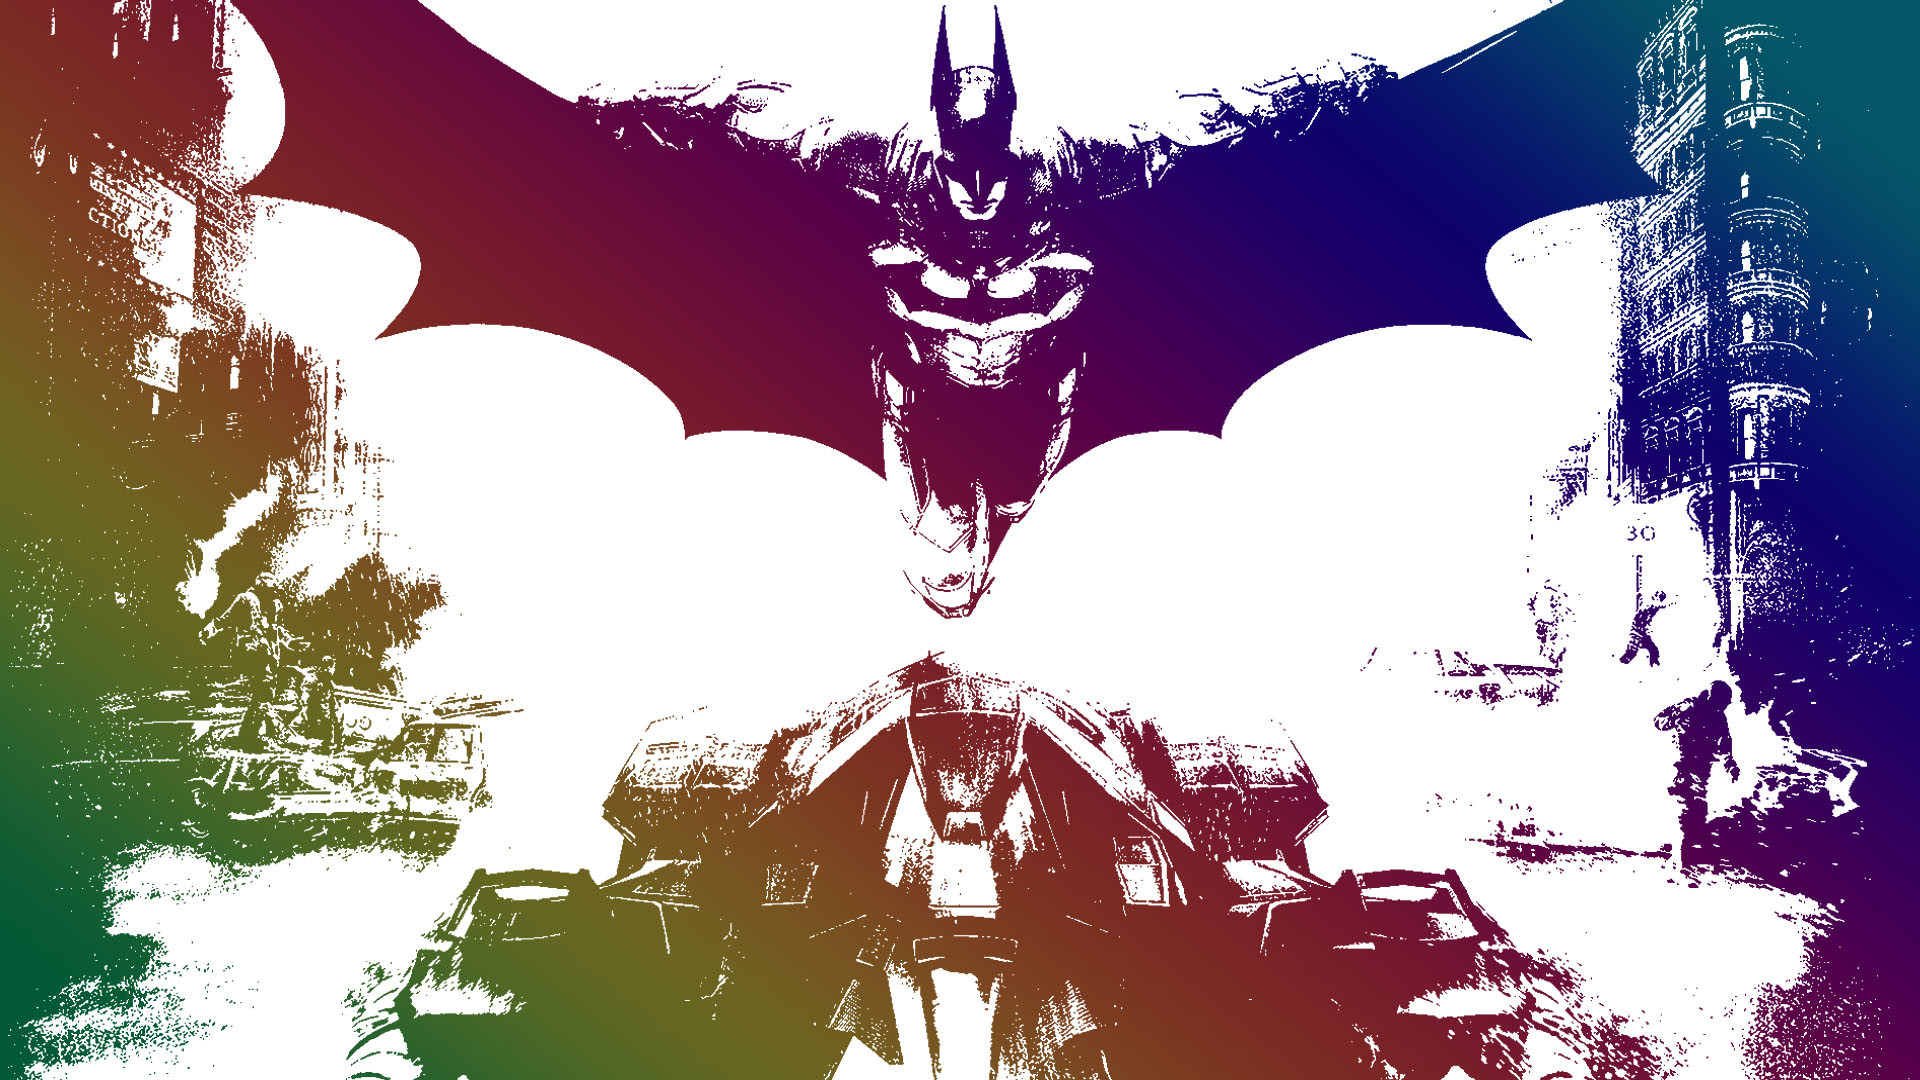 TheGoldenKeyblade Batman Arkham Knight wallpaper 2 by TheGoldenKeyblade